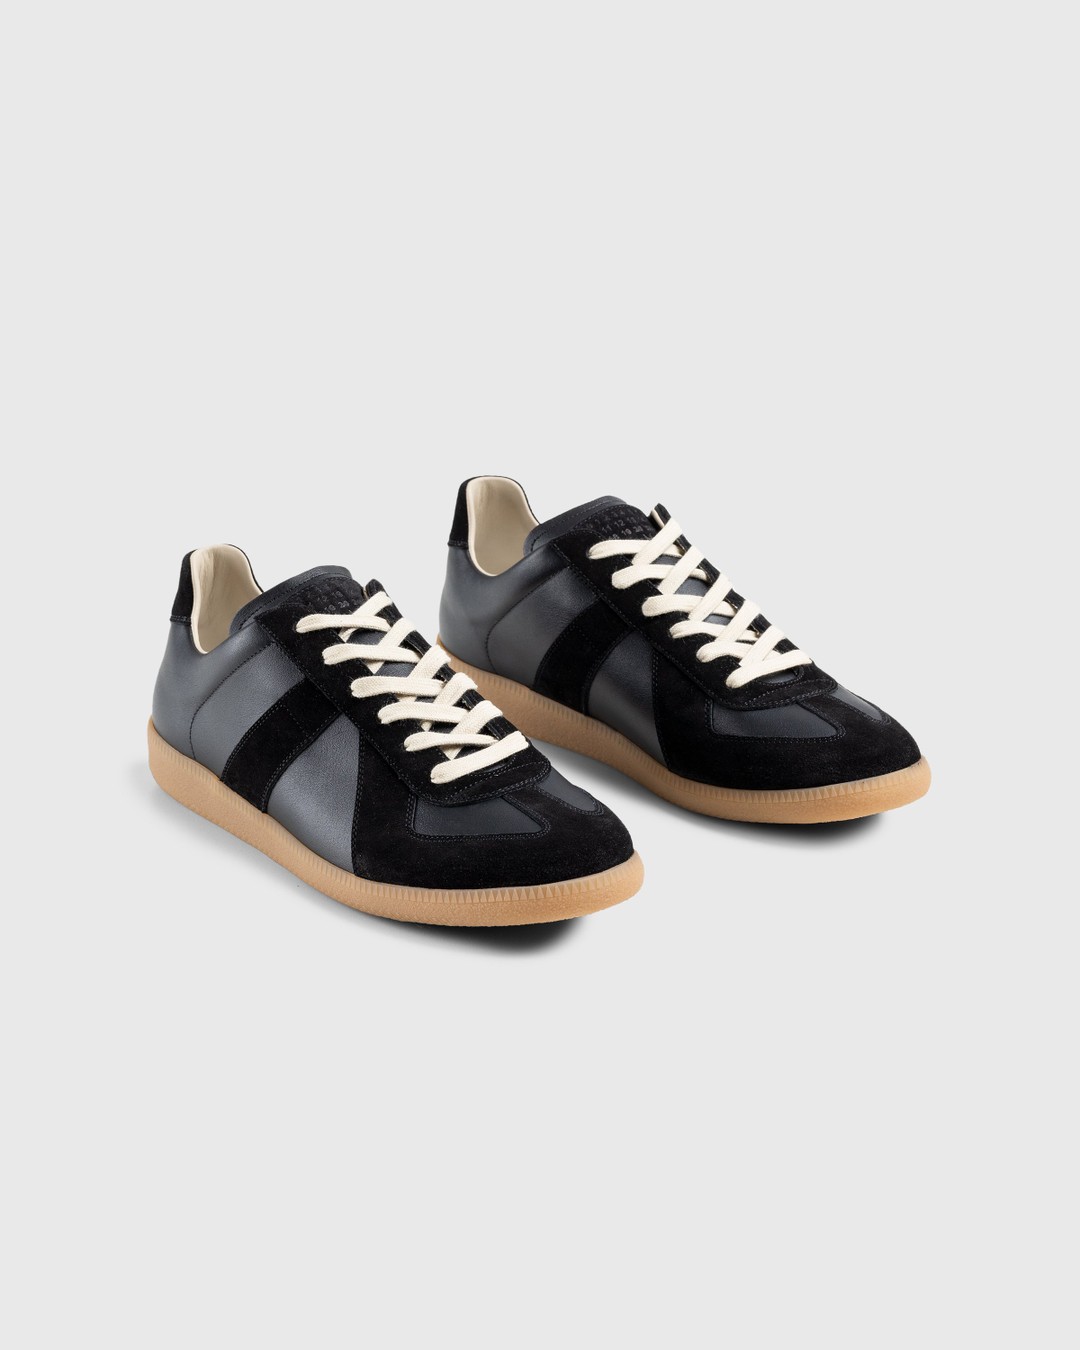 Maison Margiela – Leather Replica Sneakers Black - Low Top Sneakers - Black - Image 3